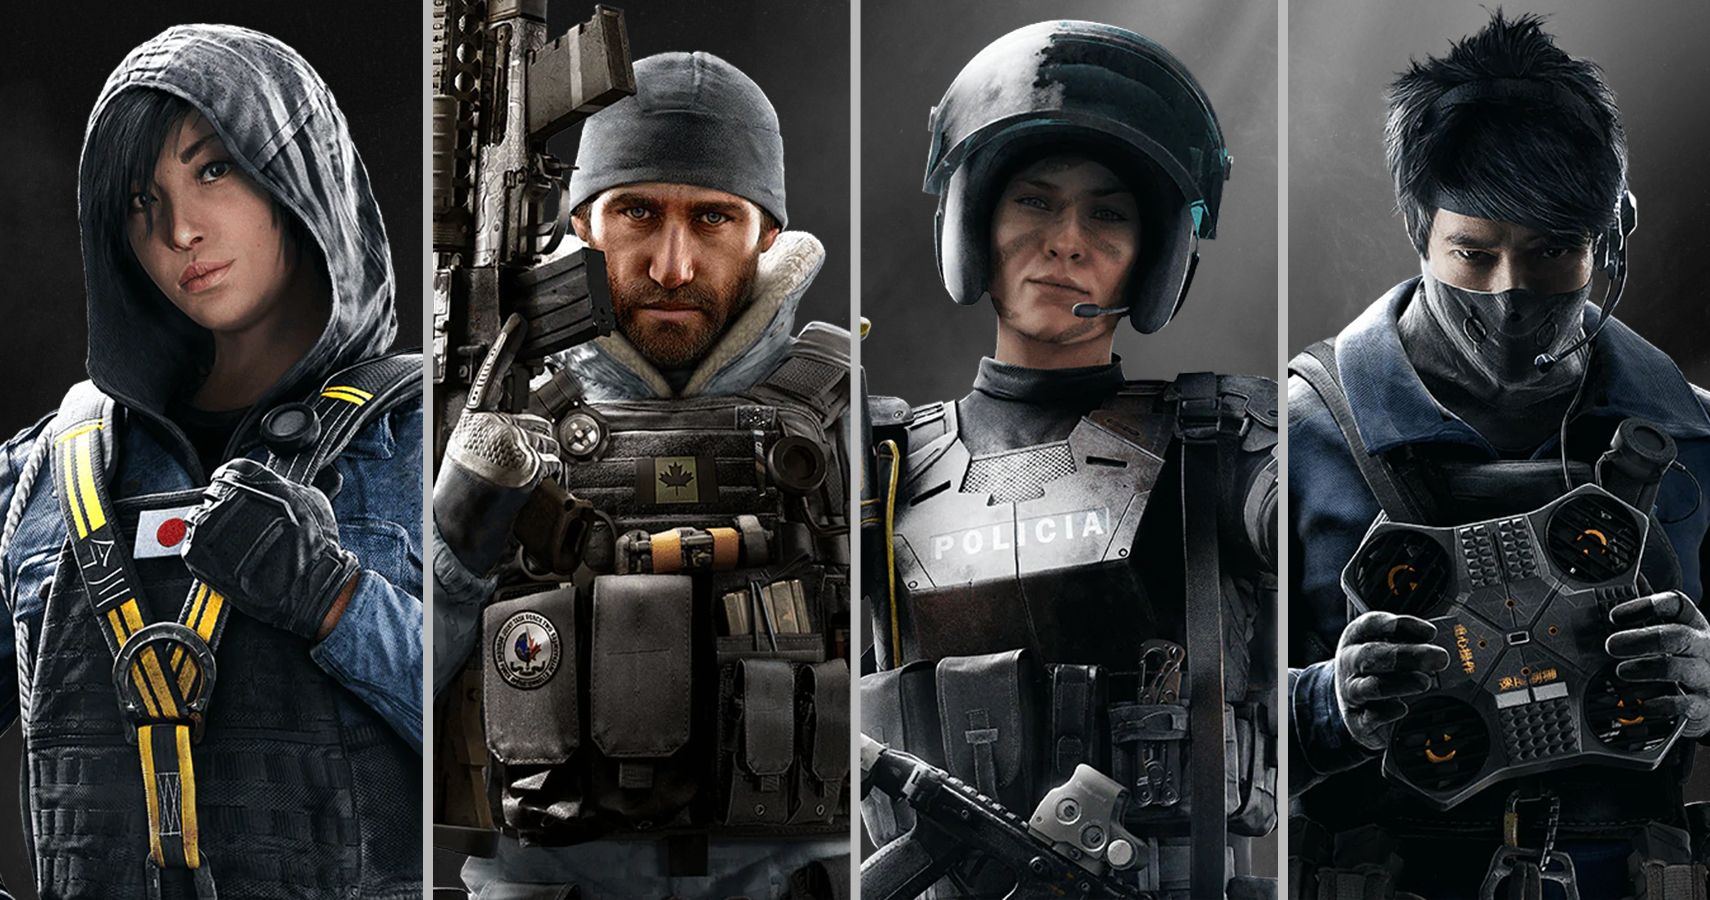 The 5 Worst Defensive Operators for Rainbow Six: Siege 